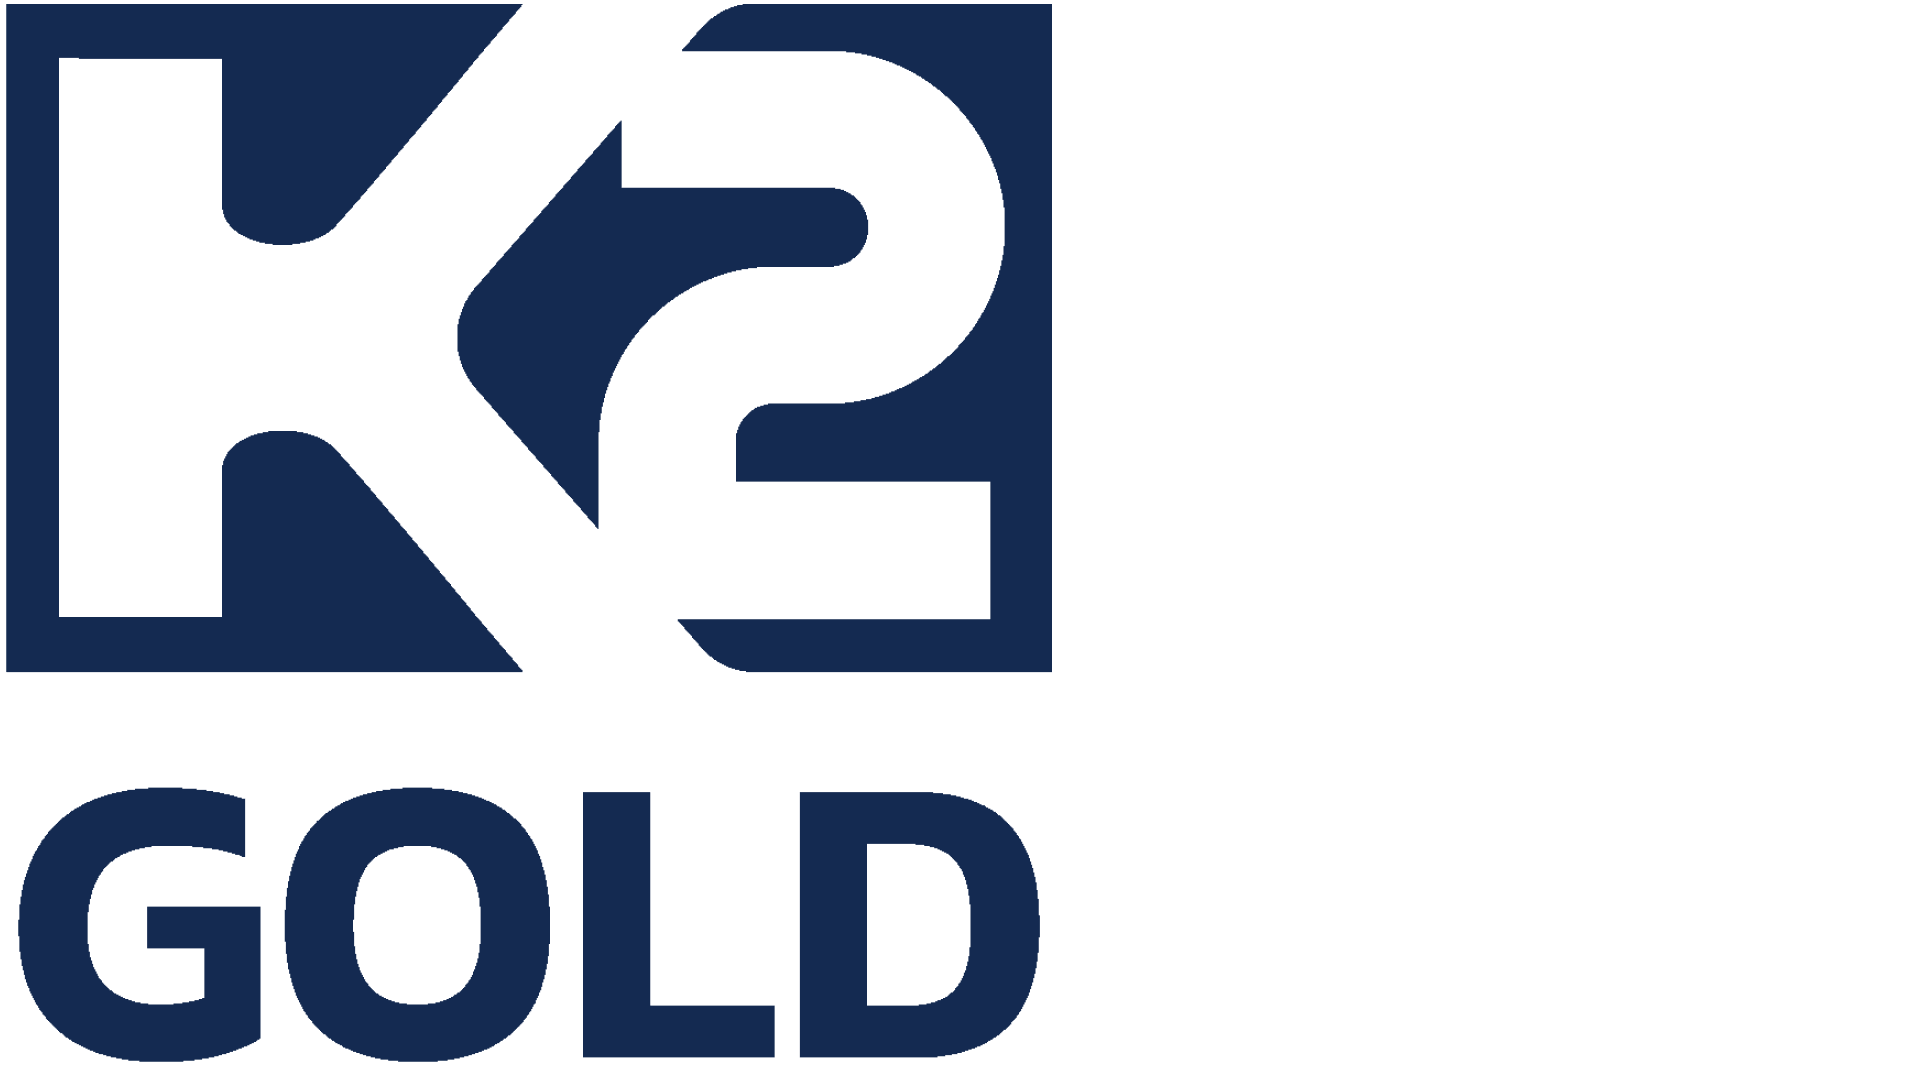 K2 Gold Corporation